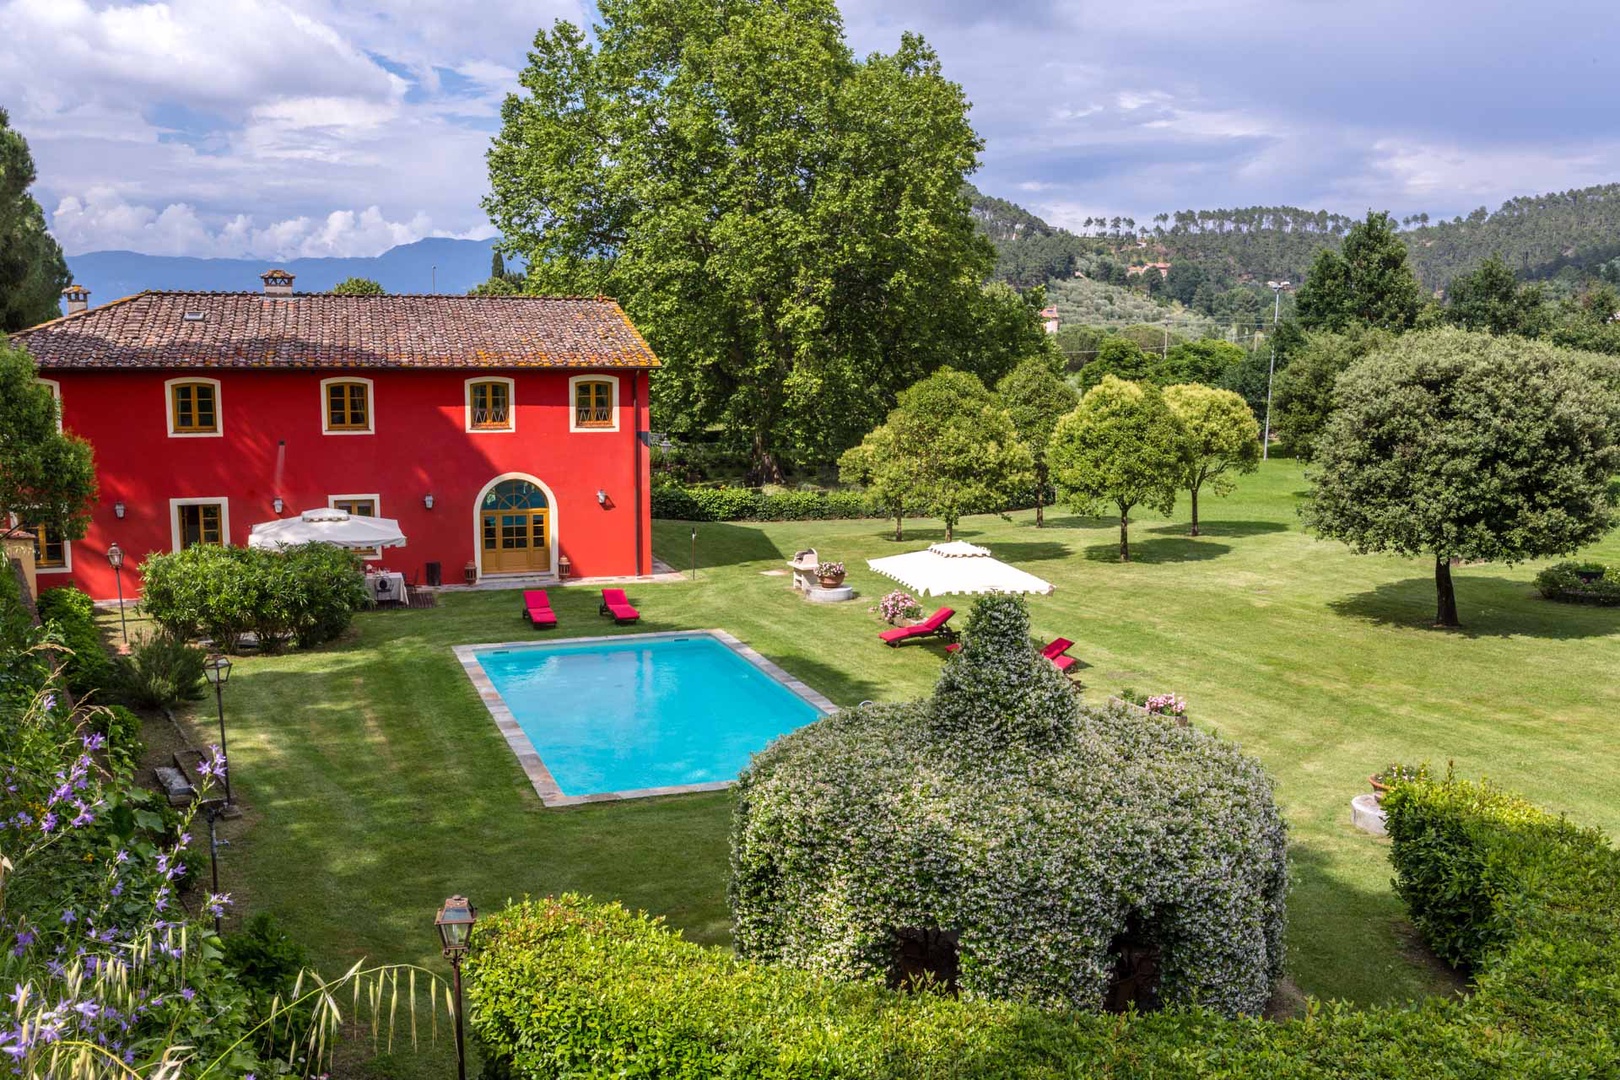 Beautiful Tuscan farmhouse with modern conveniences